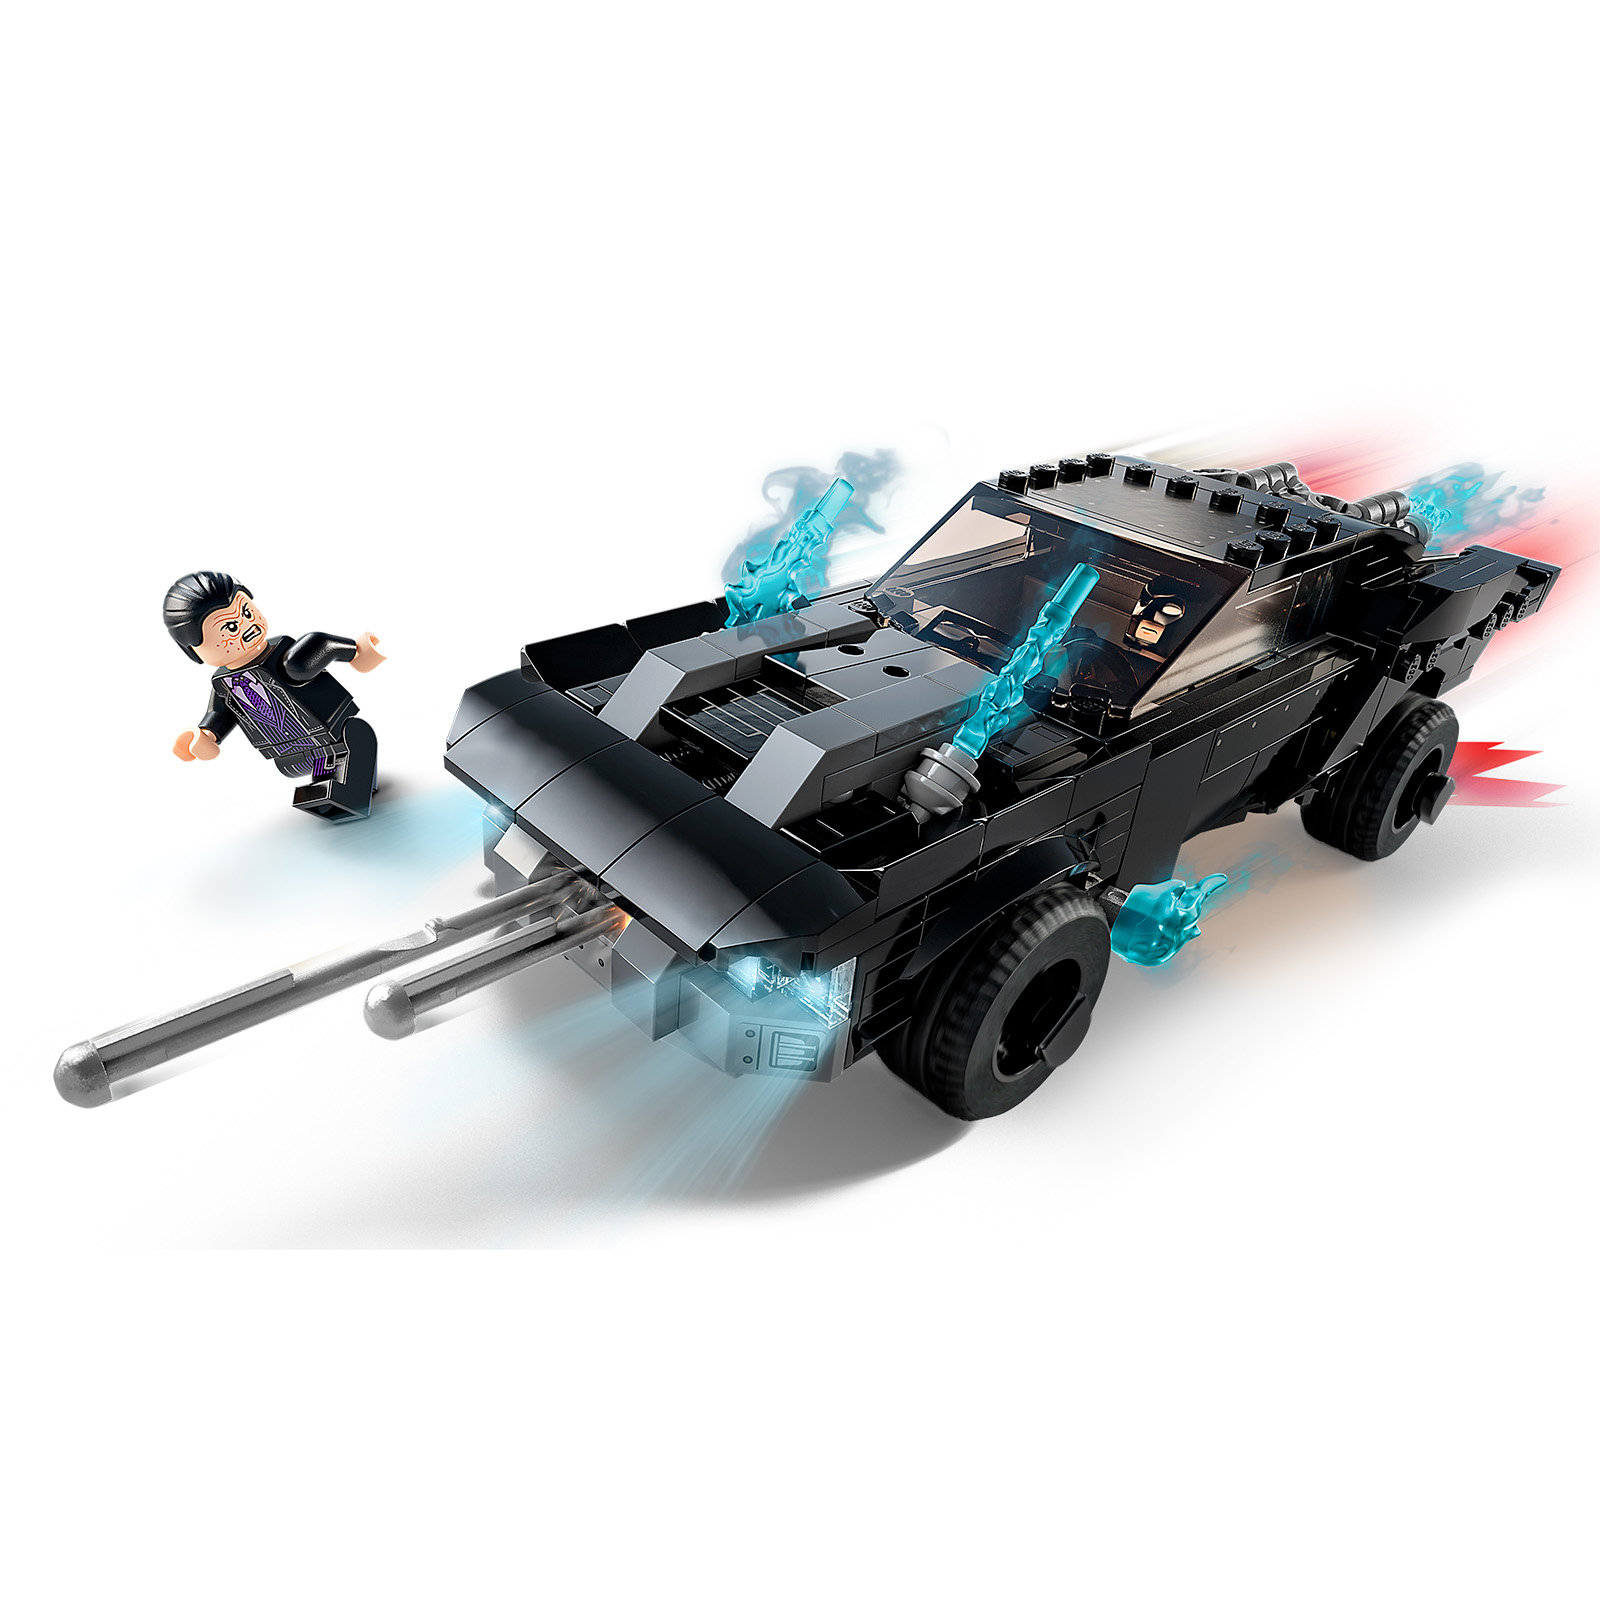 ▻ New LEGO The Batman 2022: three sets based on the movie - HOTH BRICKS